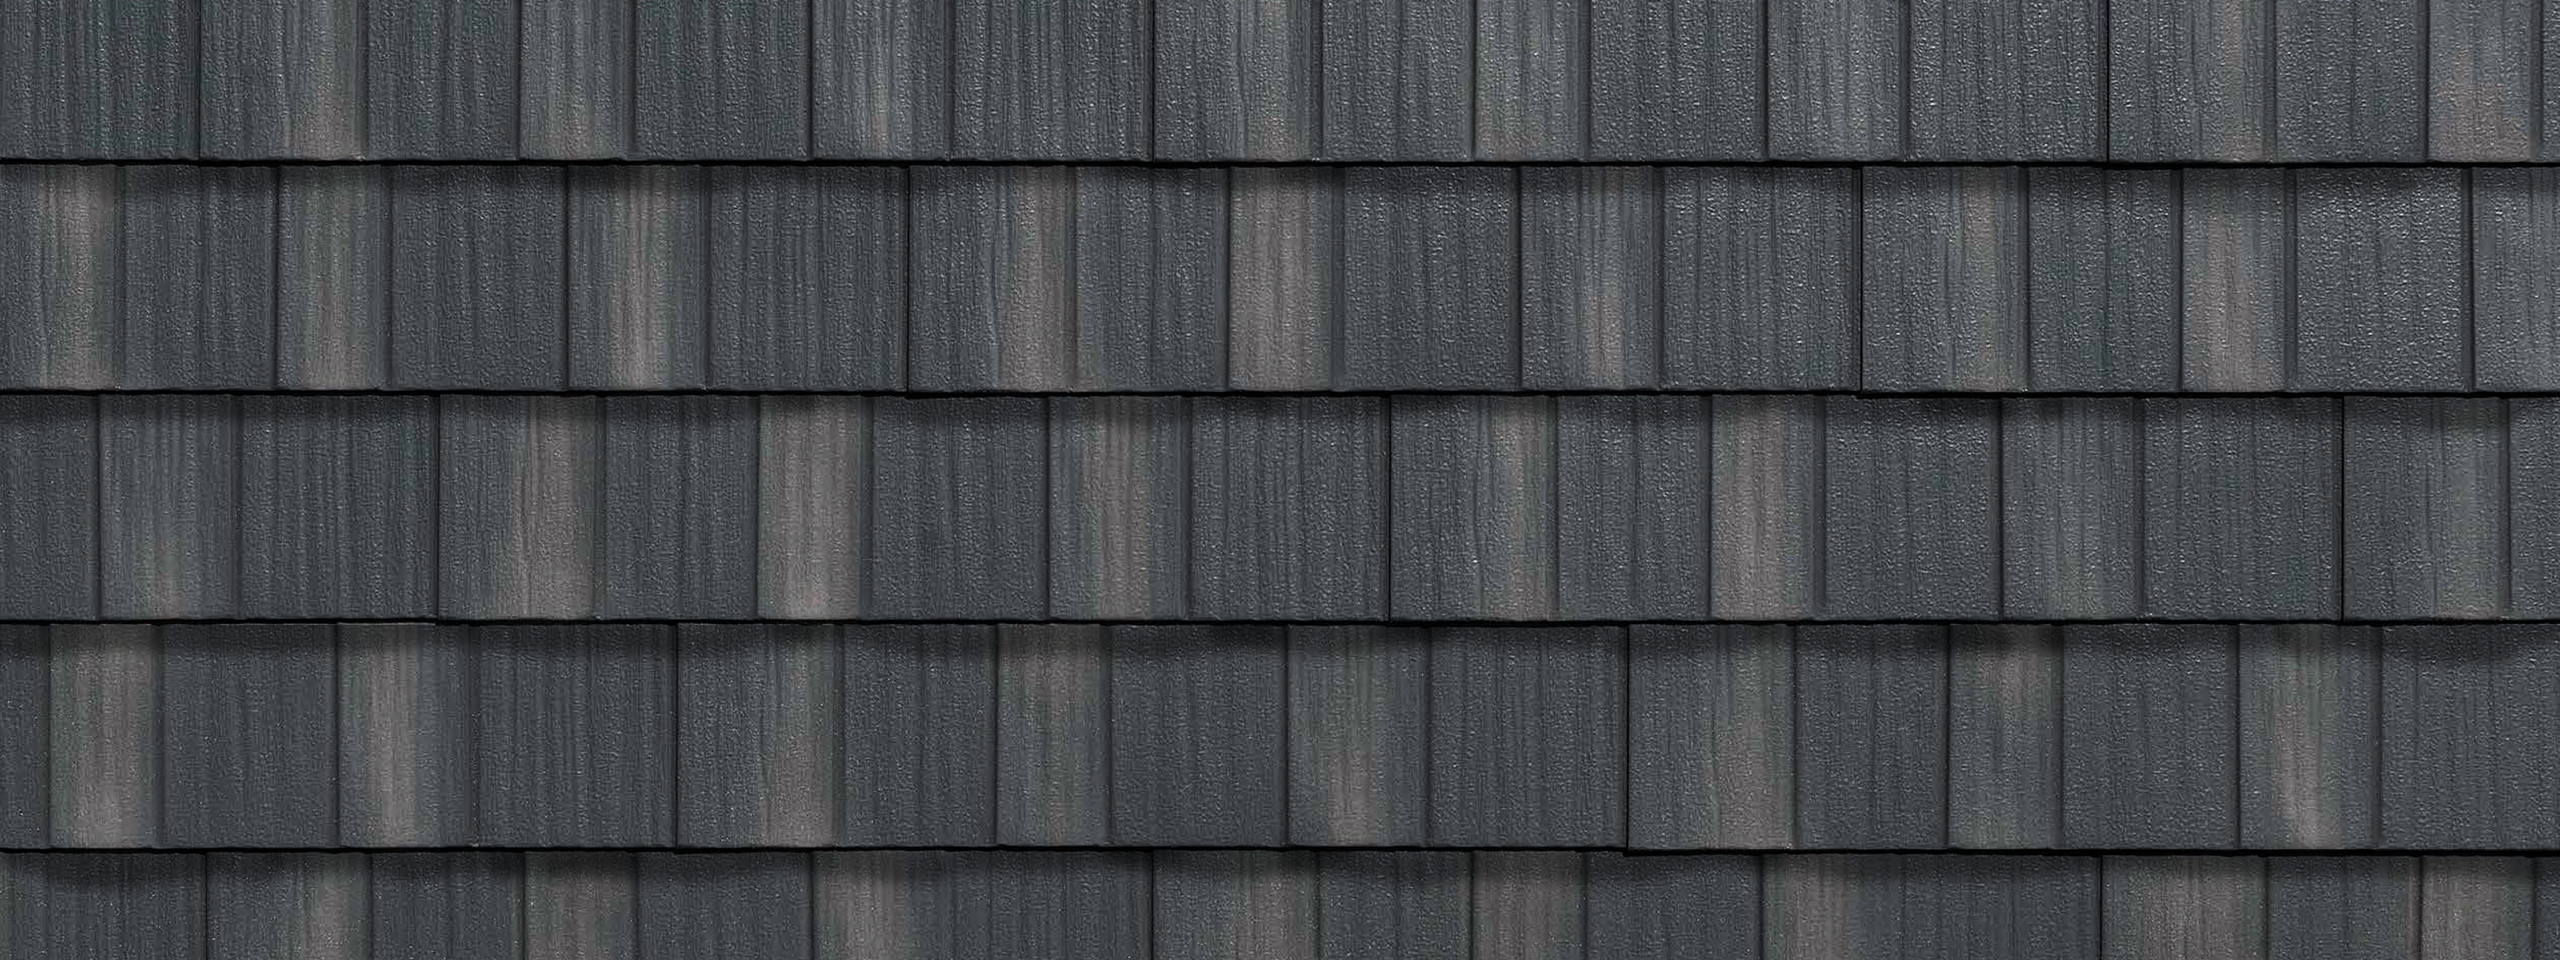 Infiniti gray/grey stone coated shake roofing